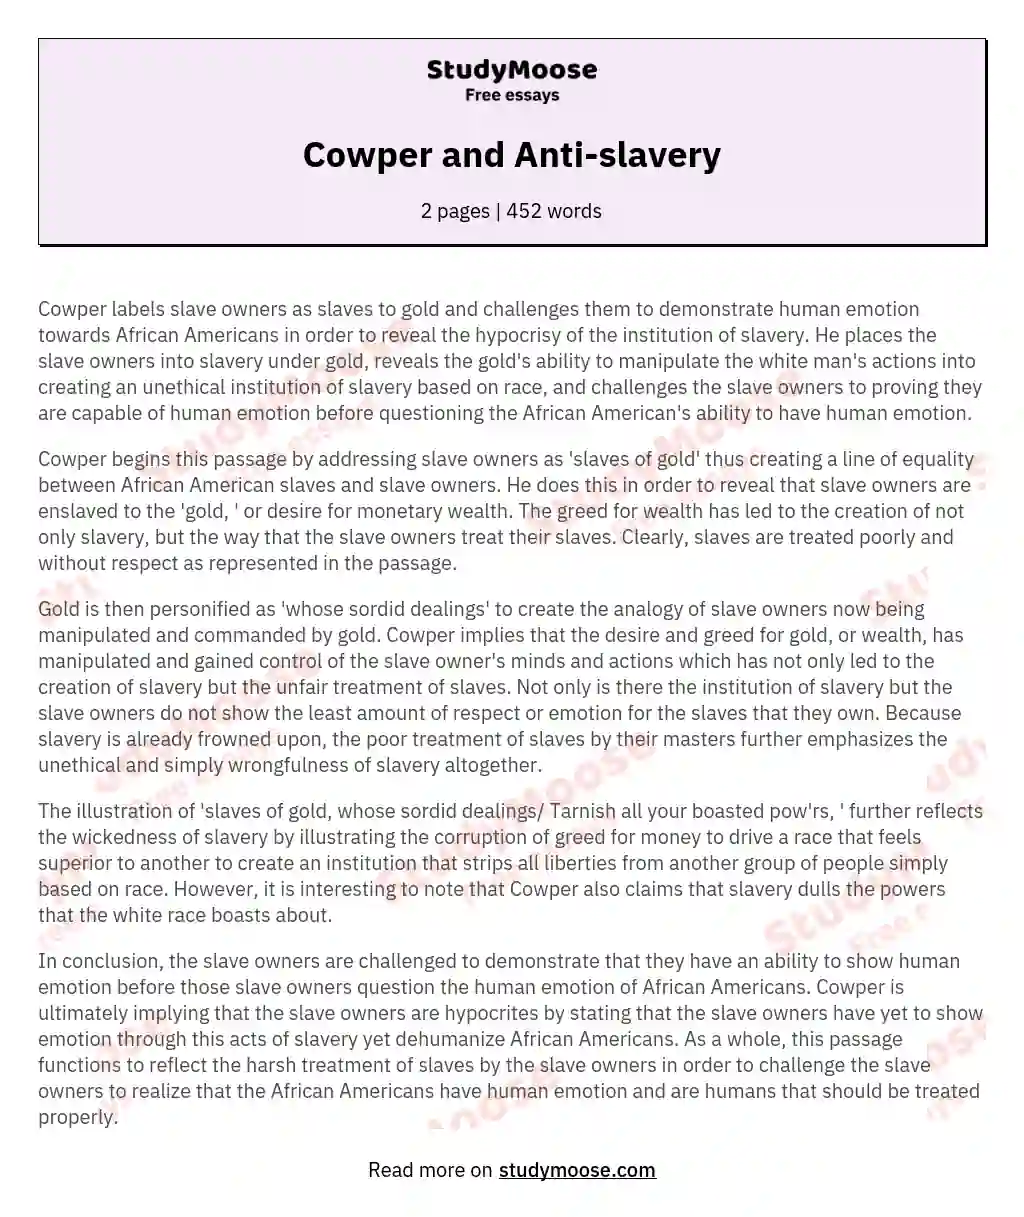 Cowper and Anti-slavery essay